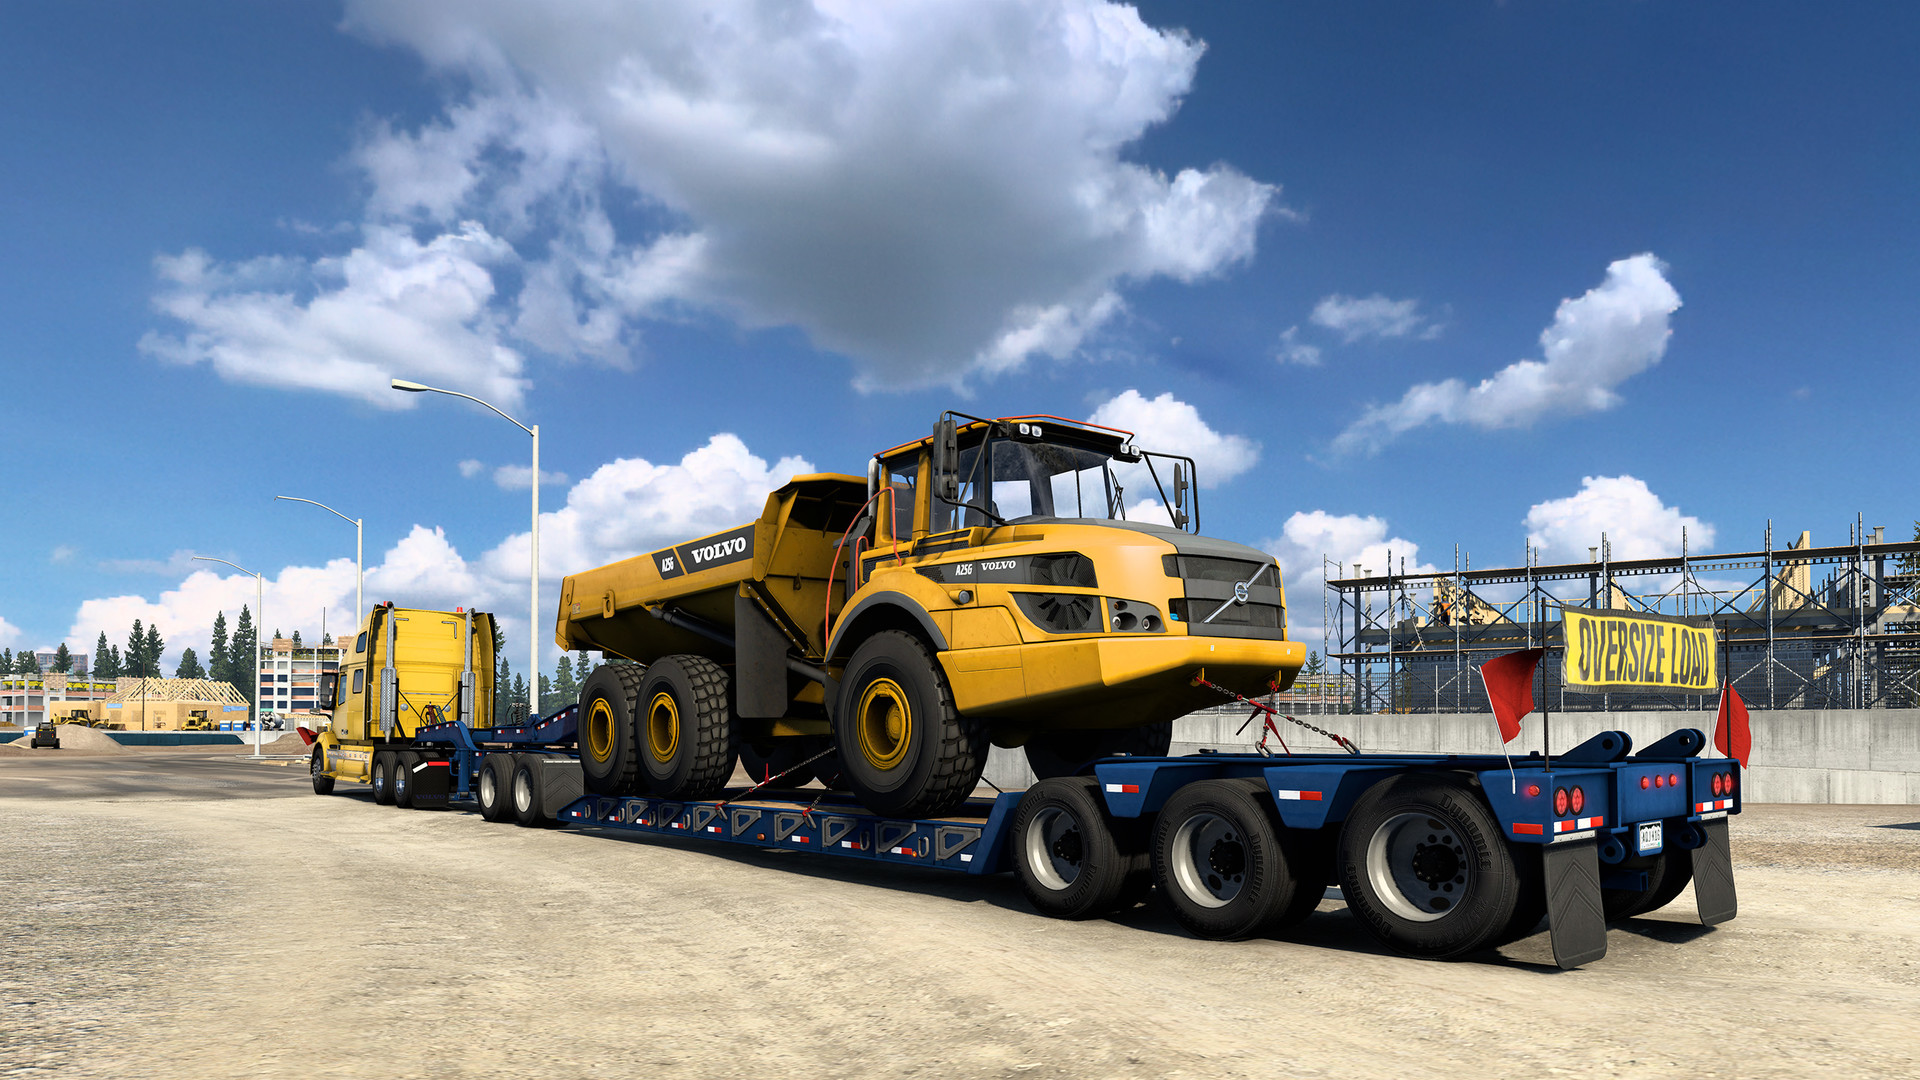 [$ 4.61] American Truck Simulator - Volvo Construction Equipment DLC Steam Altergift